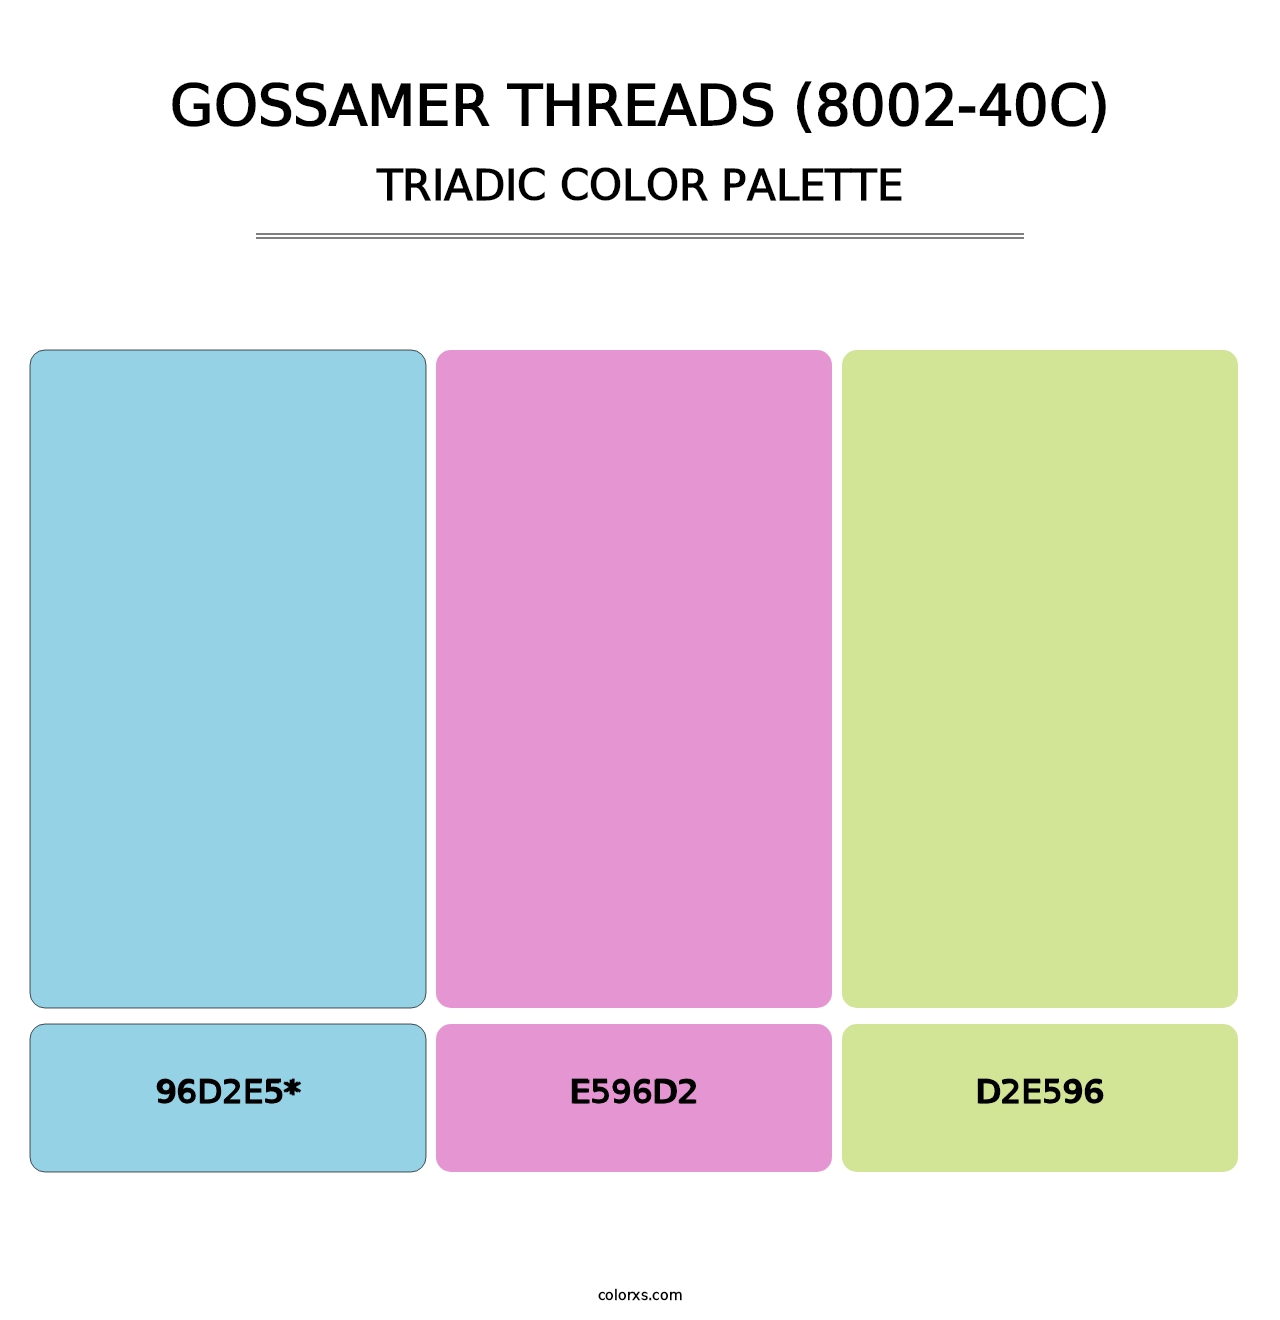 Gossamer Threads (8002-40C) - Triadic Color Palette